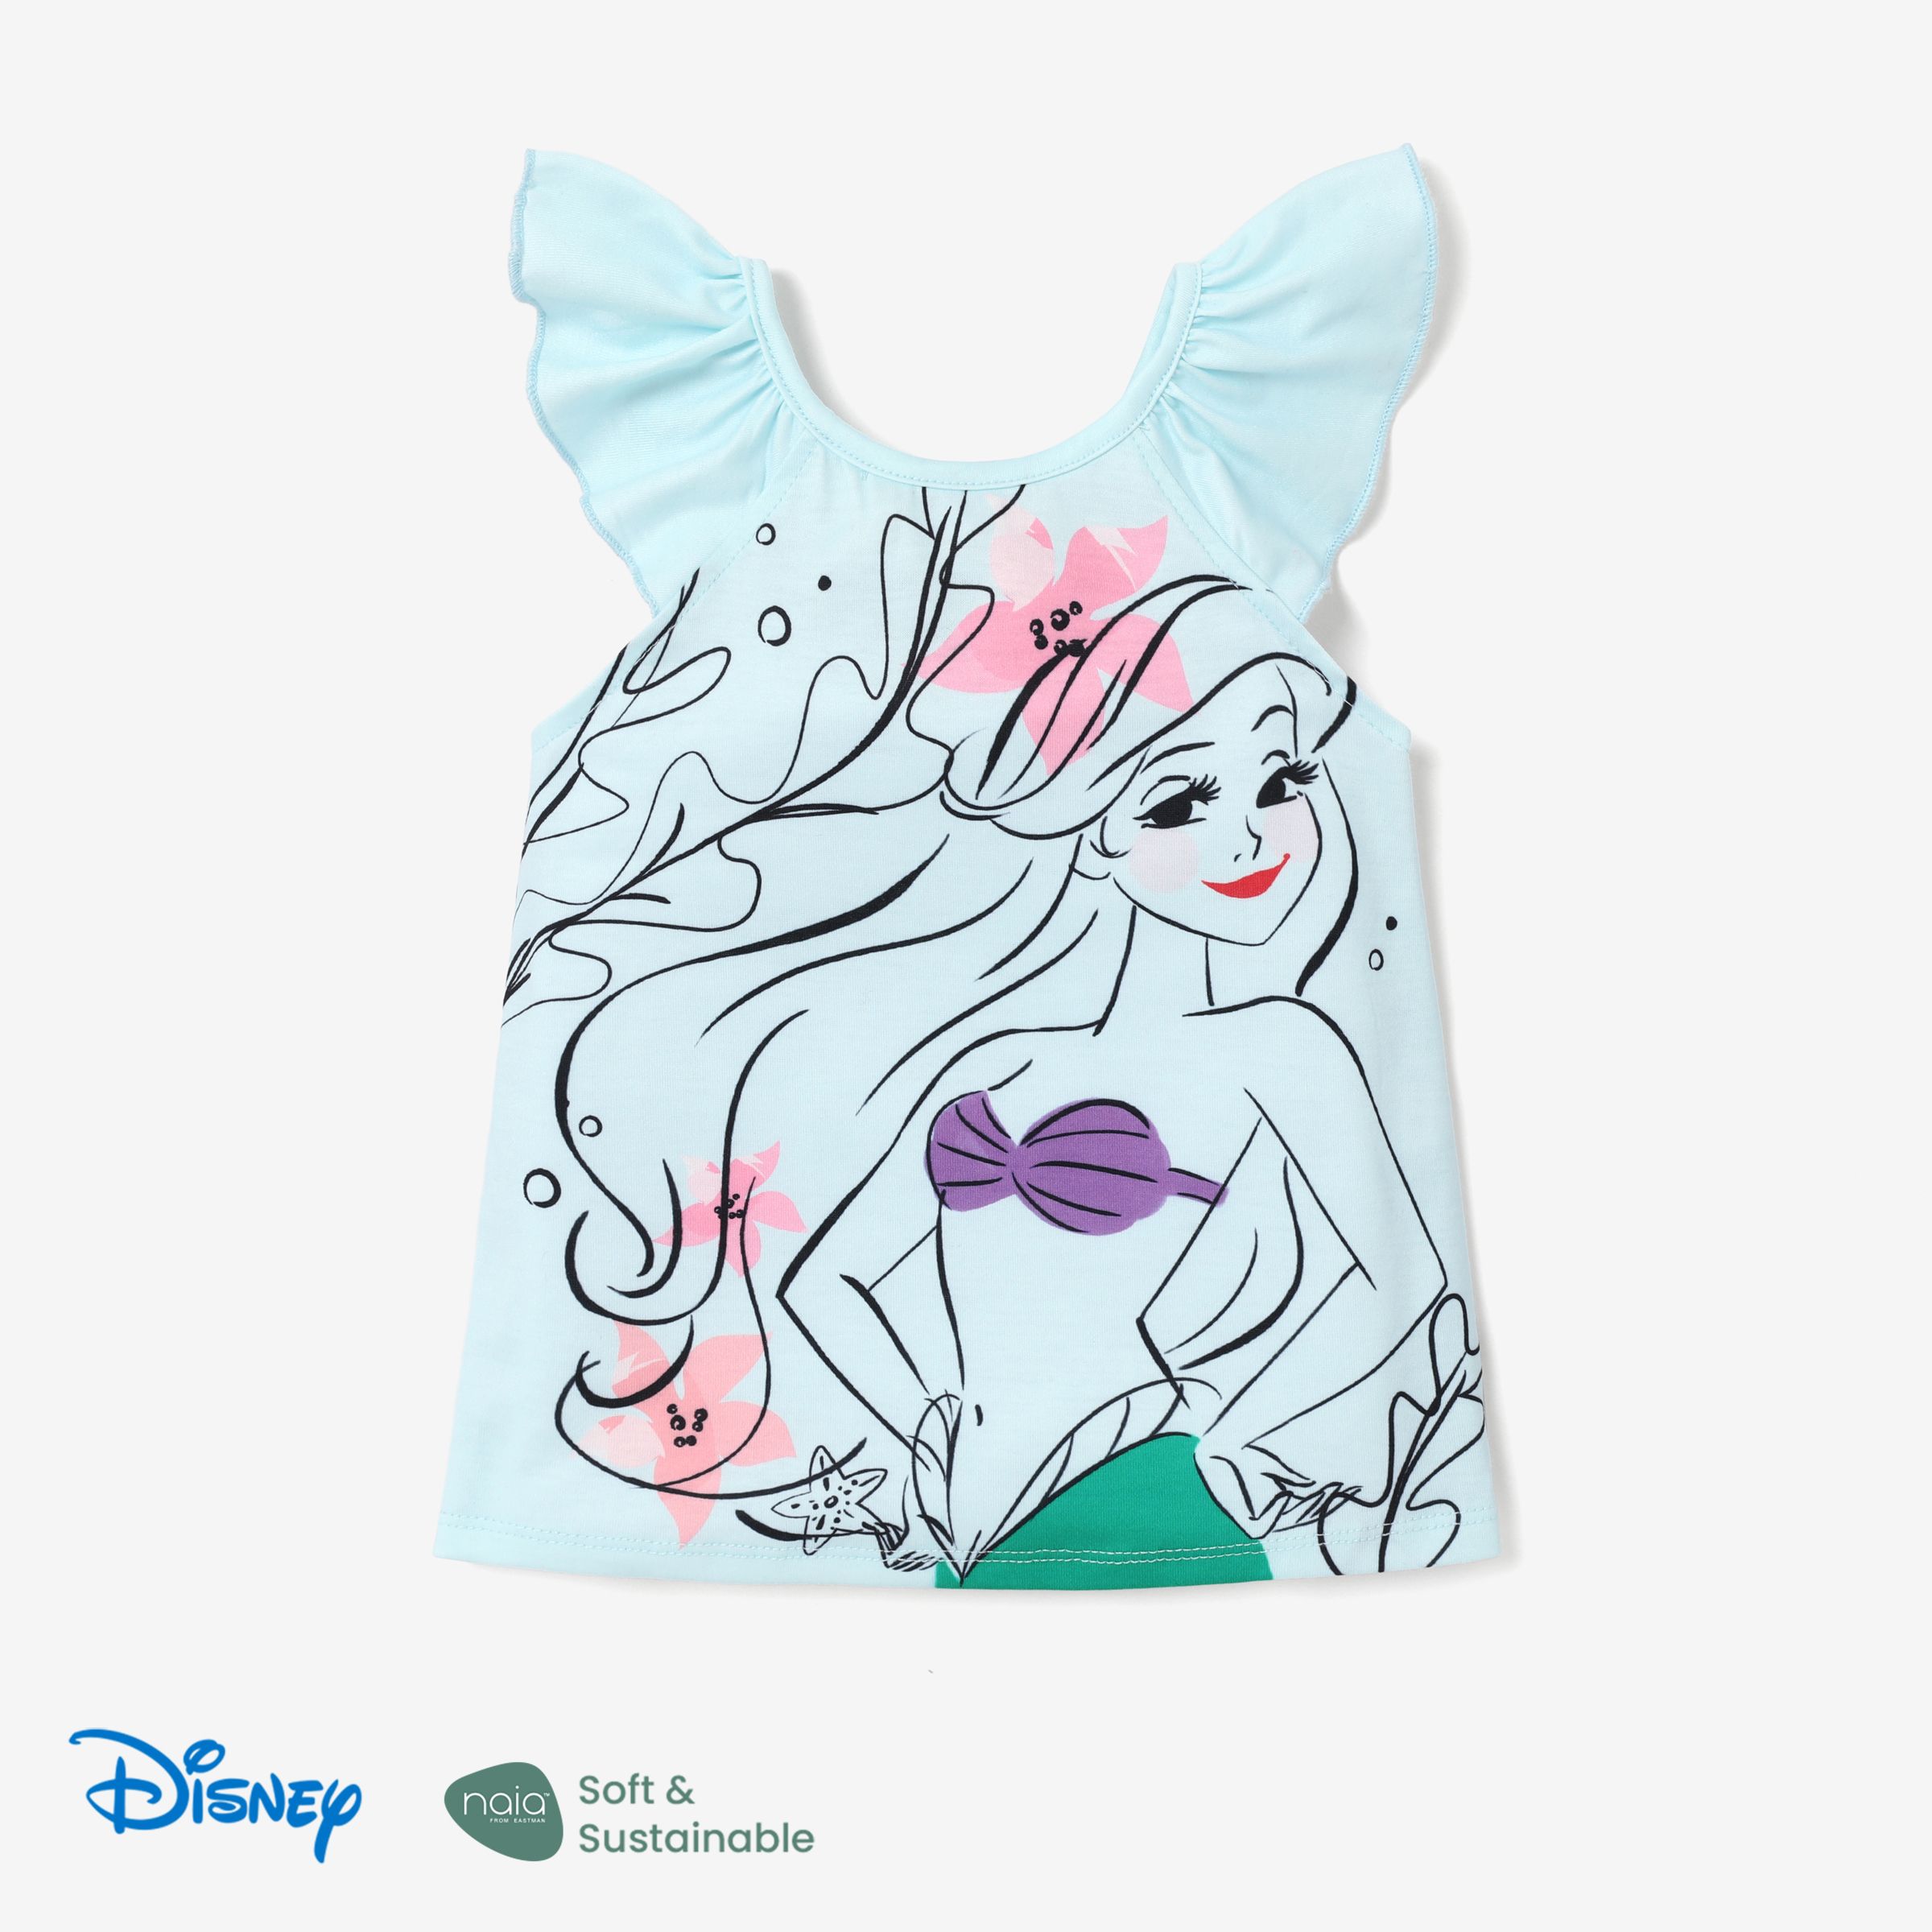 Disney Princess Toddler Girls Flutter Sleeve Naiaâ¢ Character Print Top